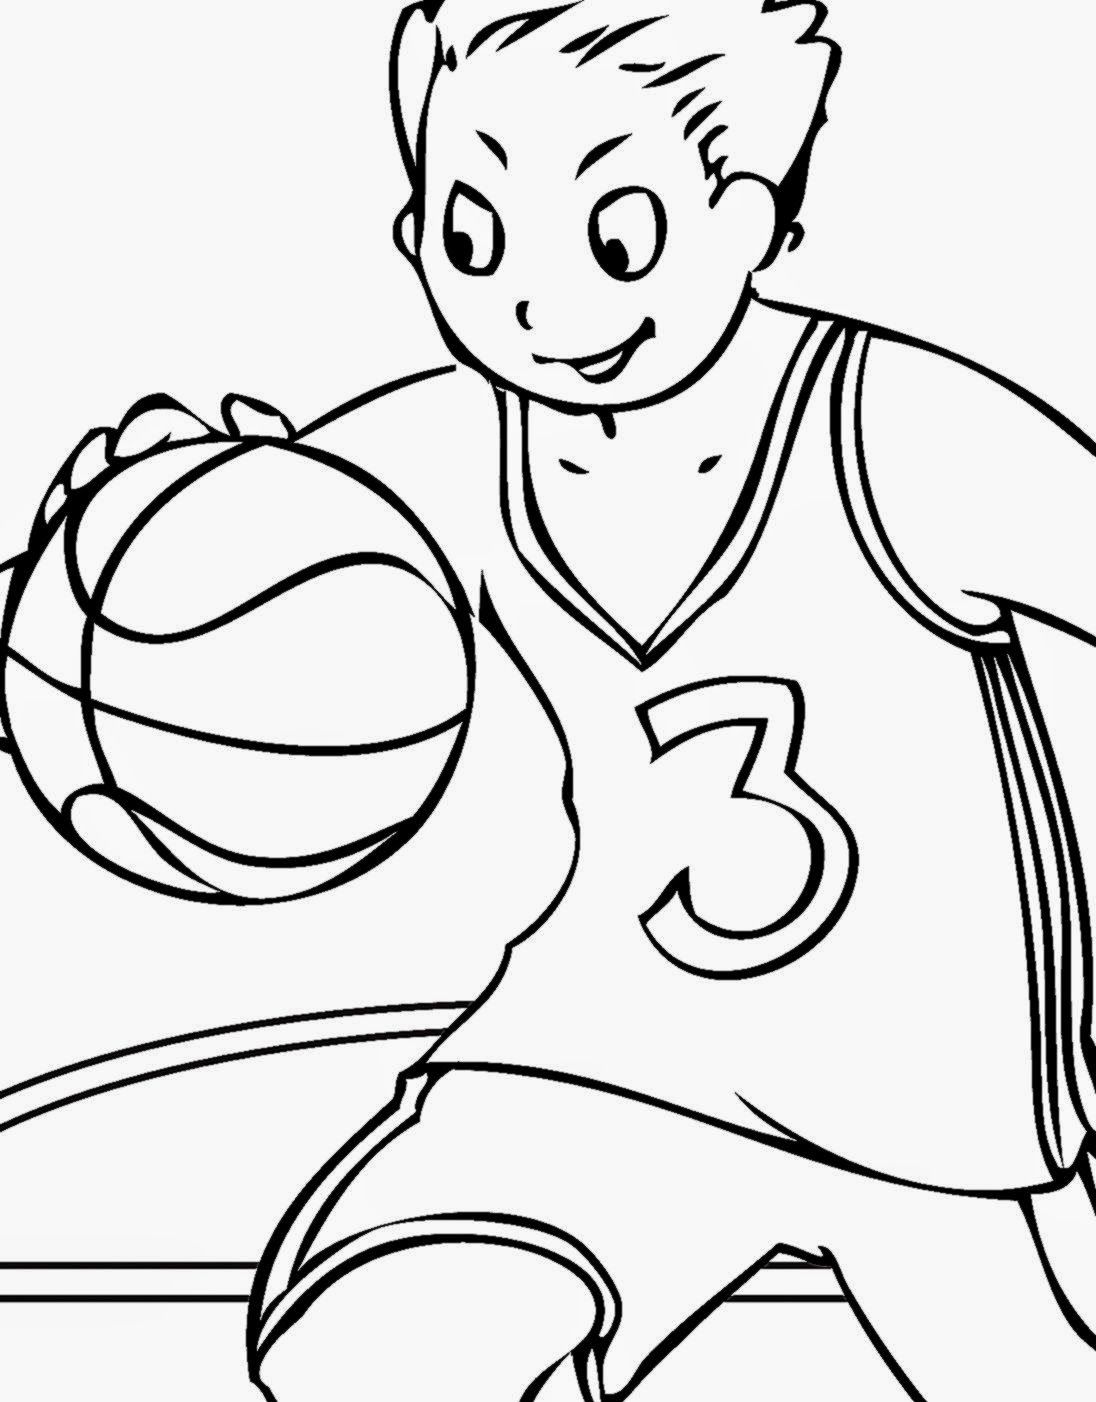 Basketball Coloring Sheet | Free Coloring Sheet